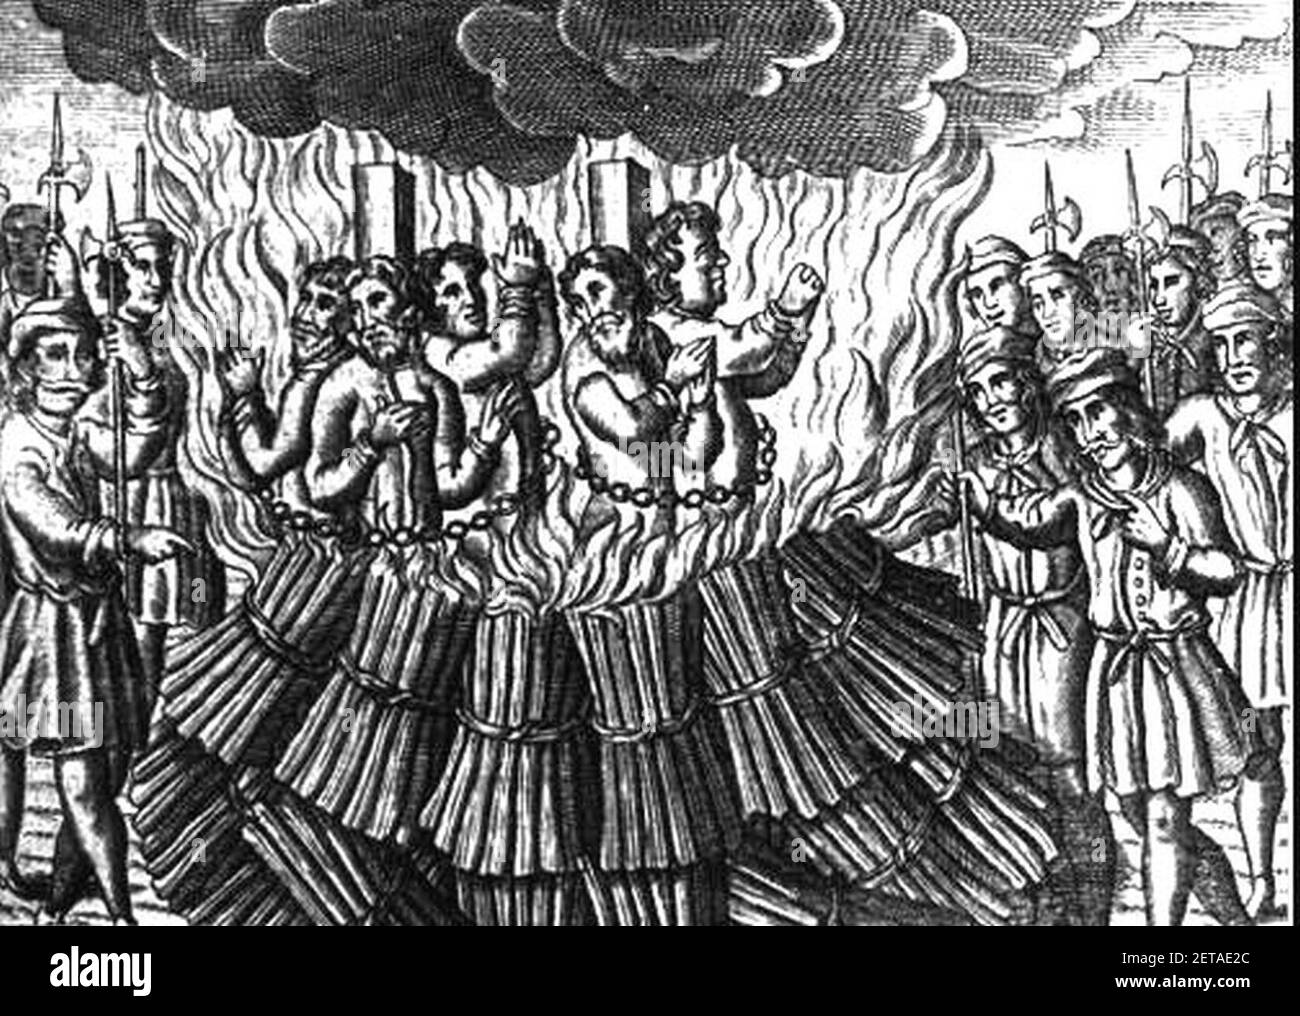 People burned as heretics. Stock Photo